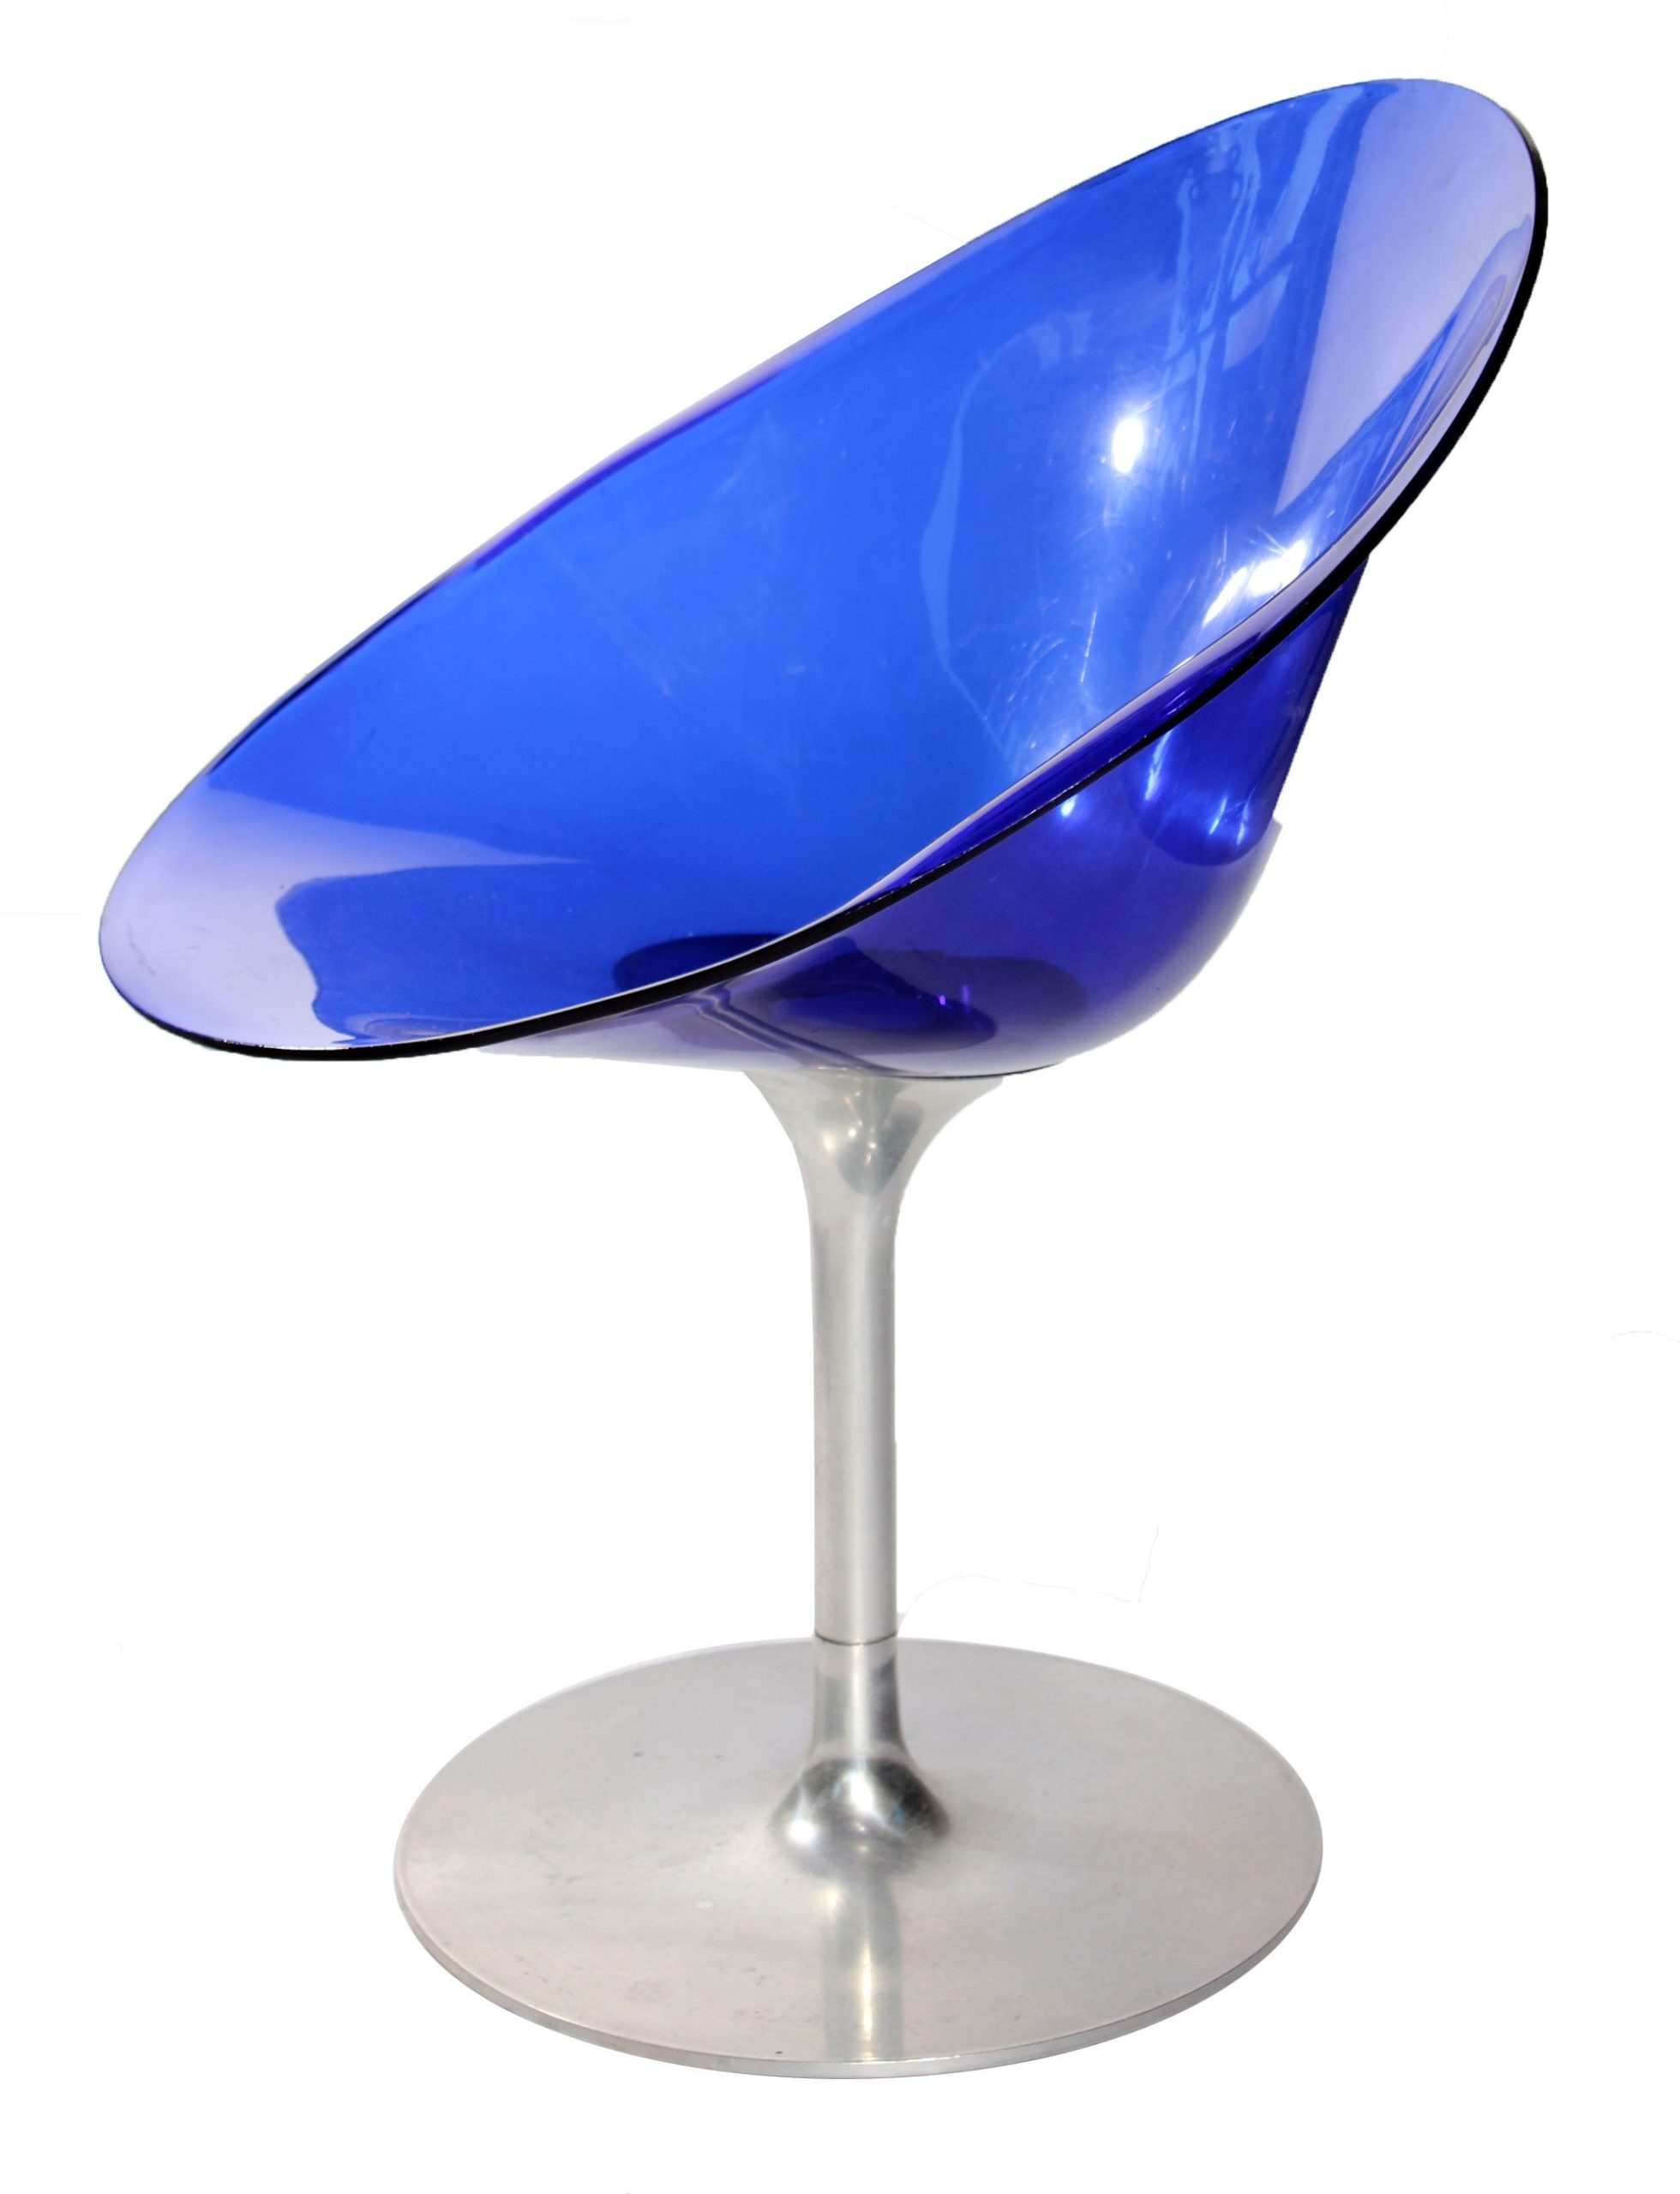 Sillas Italianas Giratorias Eros de Lucita Azul, de Philippe Starck para Kartell